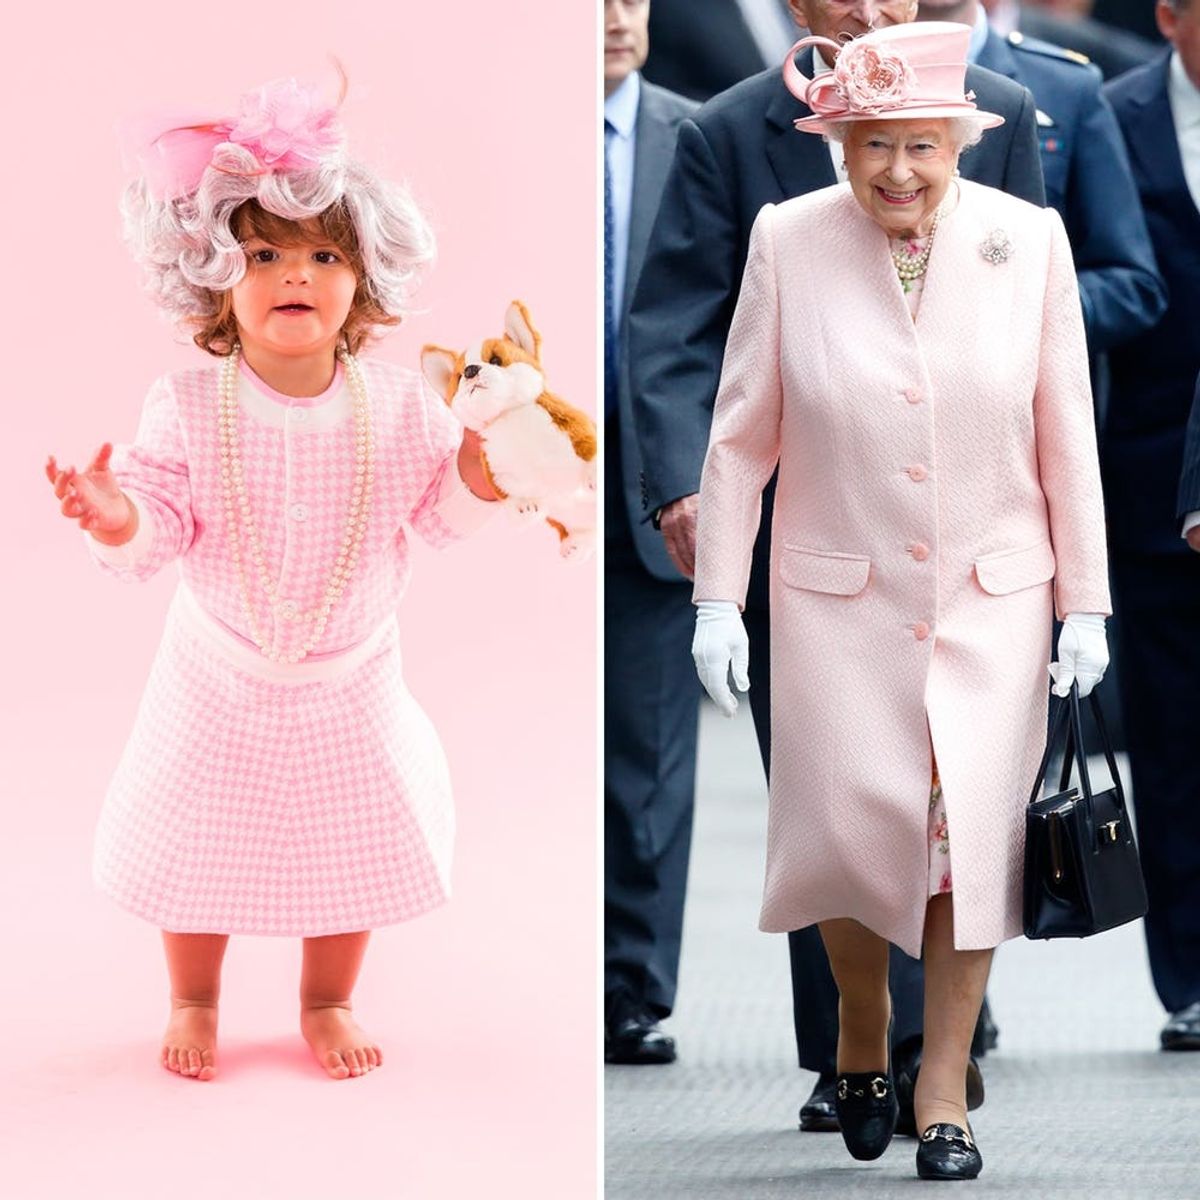 This Queen Elizabeth Toddler Costume Is Definitely Crown-Worthy